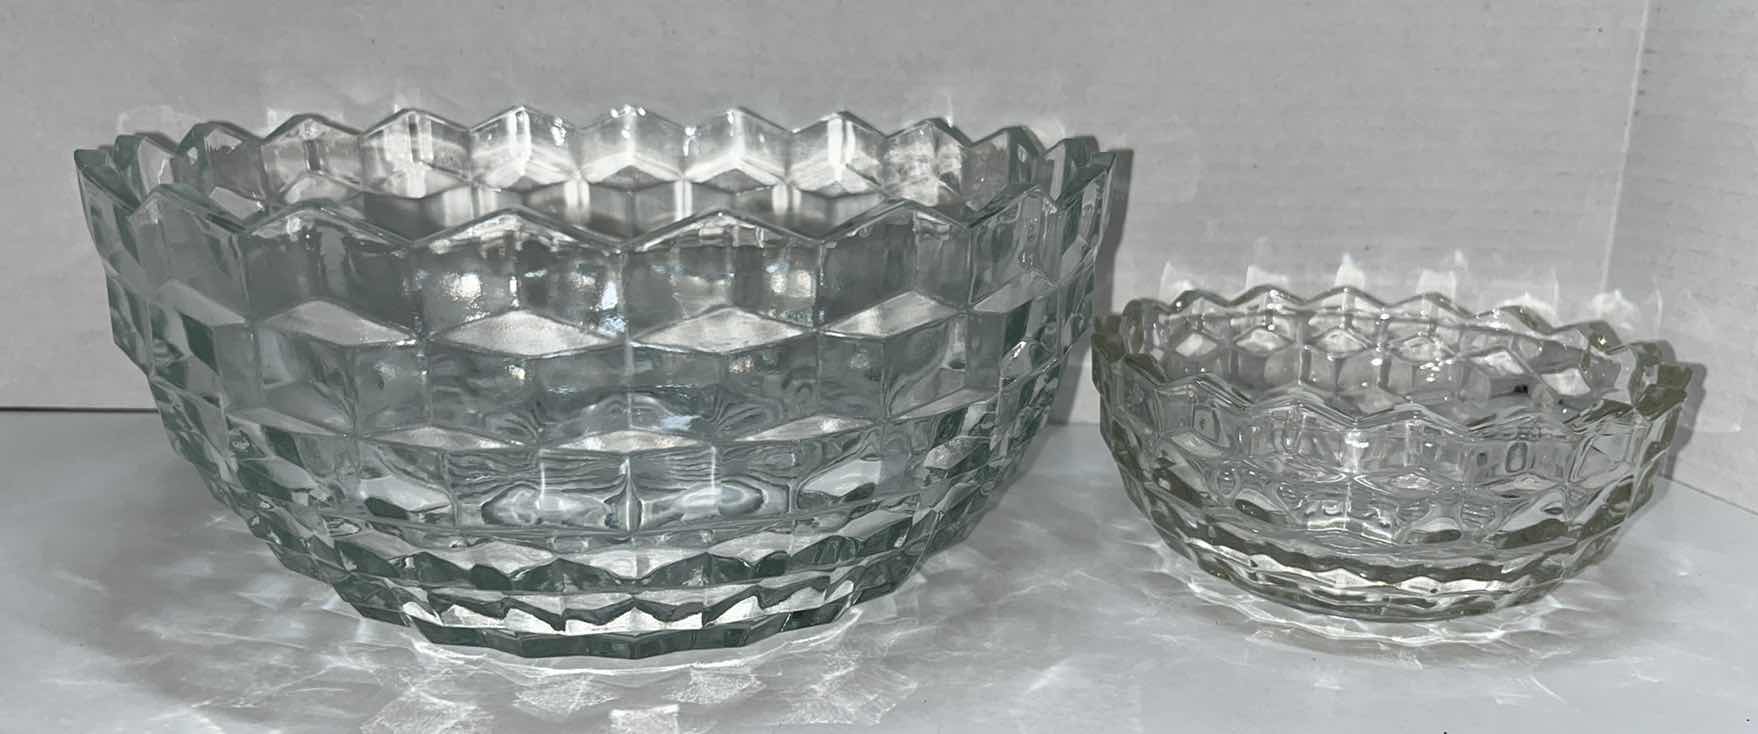 Photo 2 of VINTAGE 9" FOSTORIA AMERICAN CLEAR GLASS SERVING BOWL & 5” DESSERT BOWLS